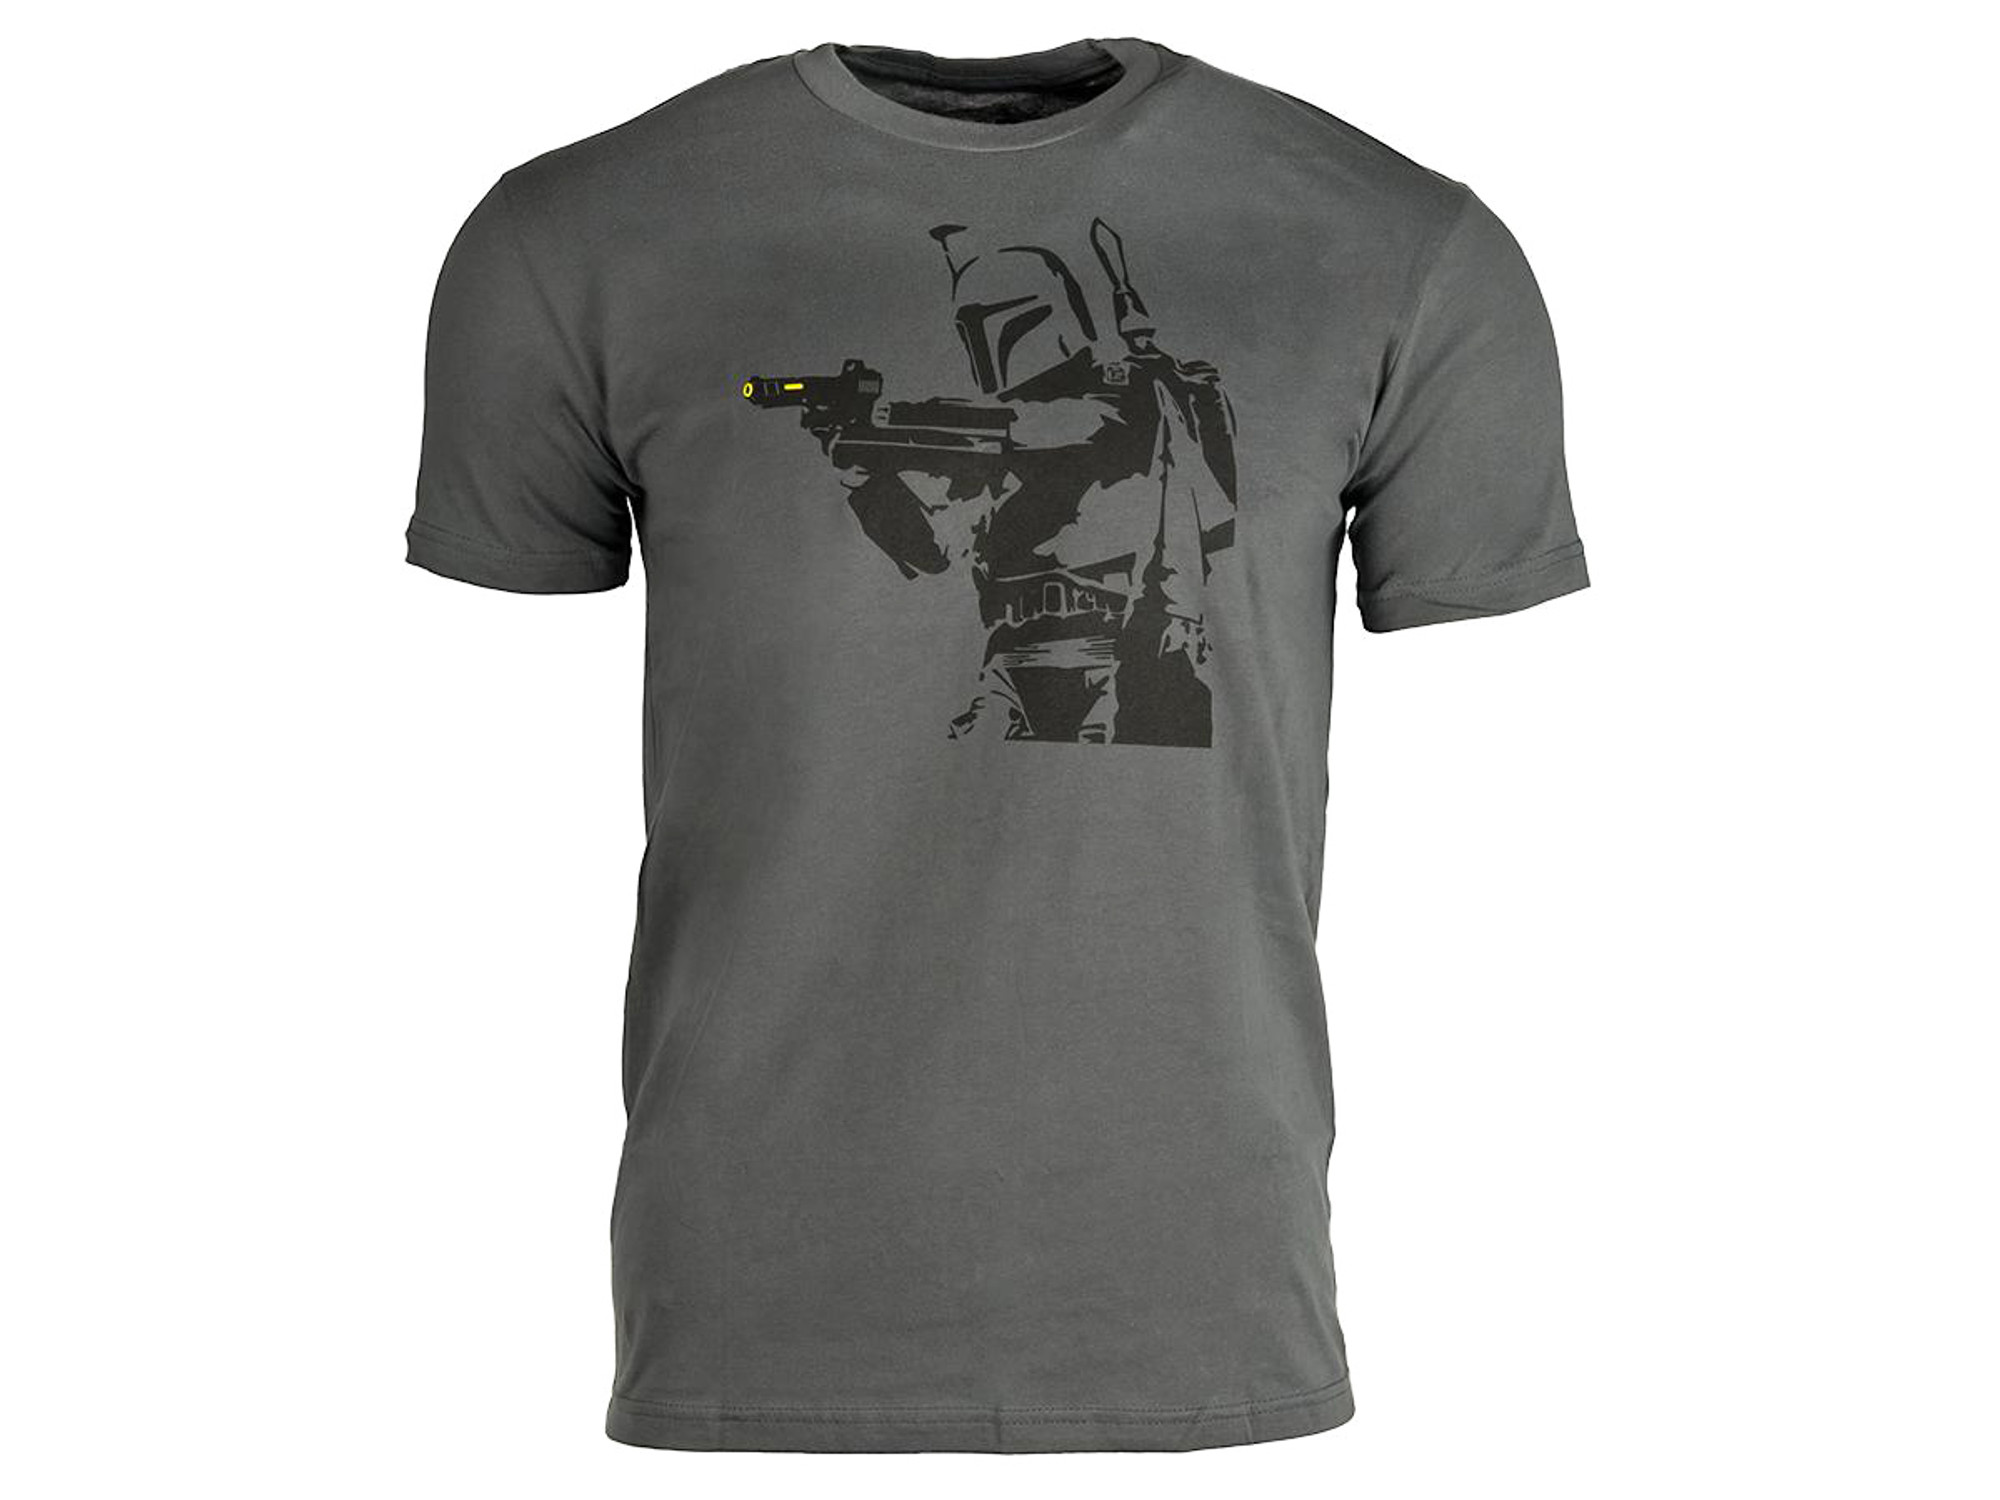 Salient Arms "Bobba Fett" Screen Printed Cotton T-Shirt (Size: Mens Medium)